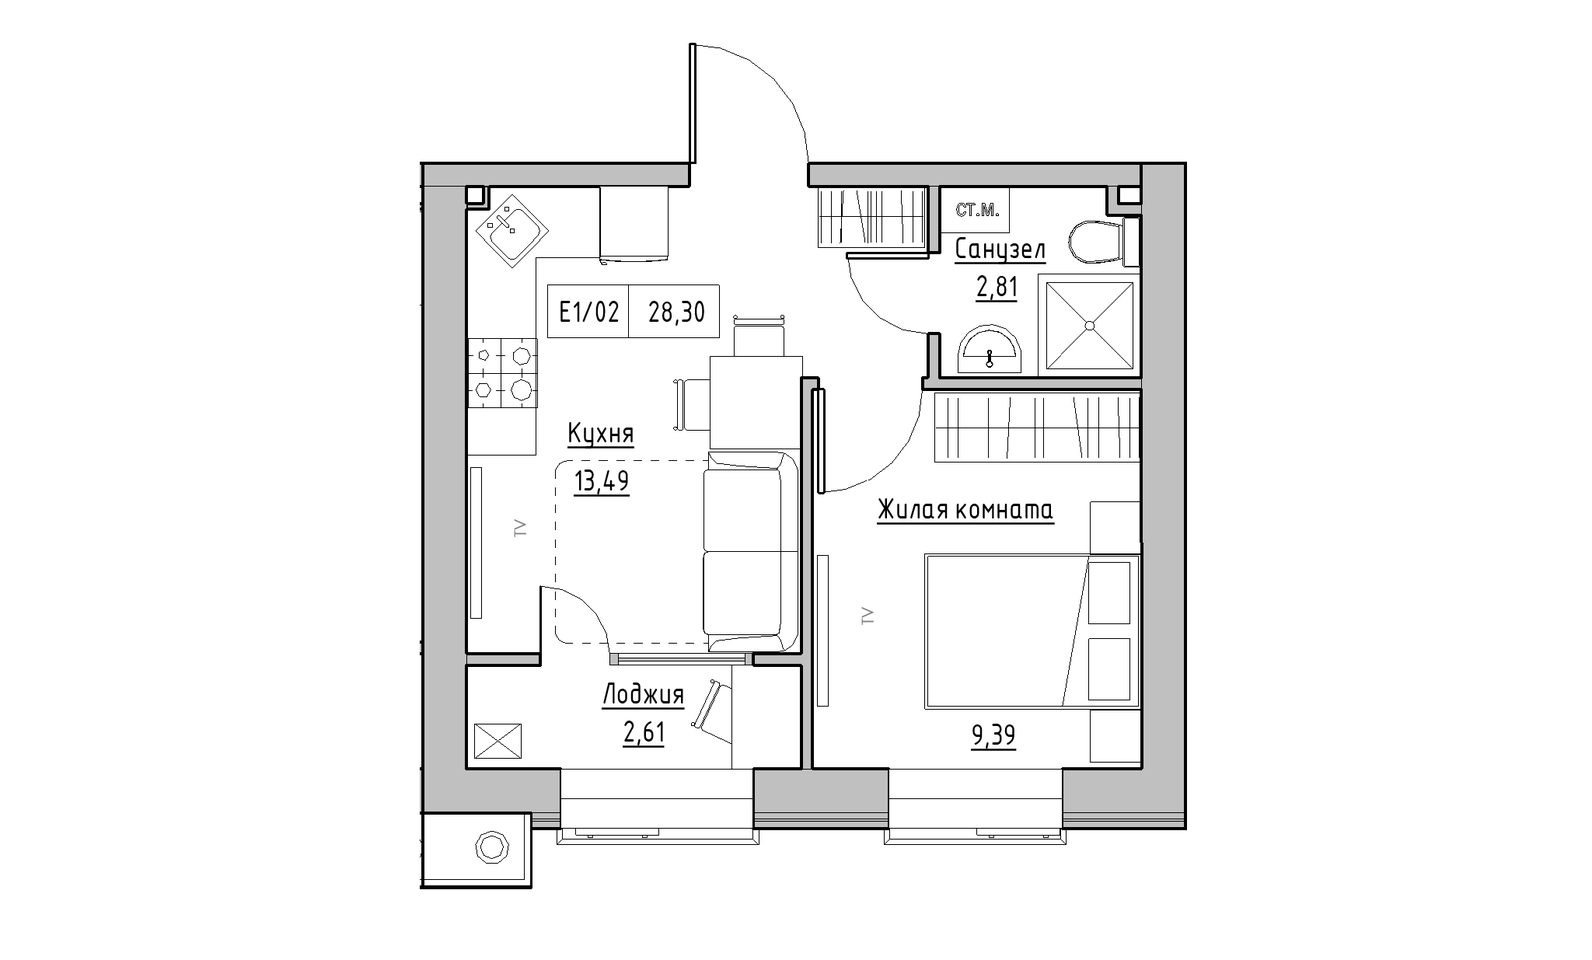 Planning 1-rm flats area 28.3m2, KS-014-02/0001.